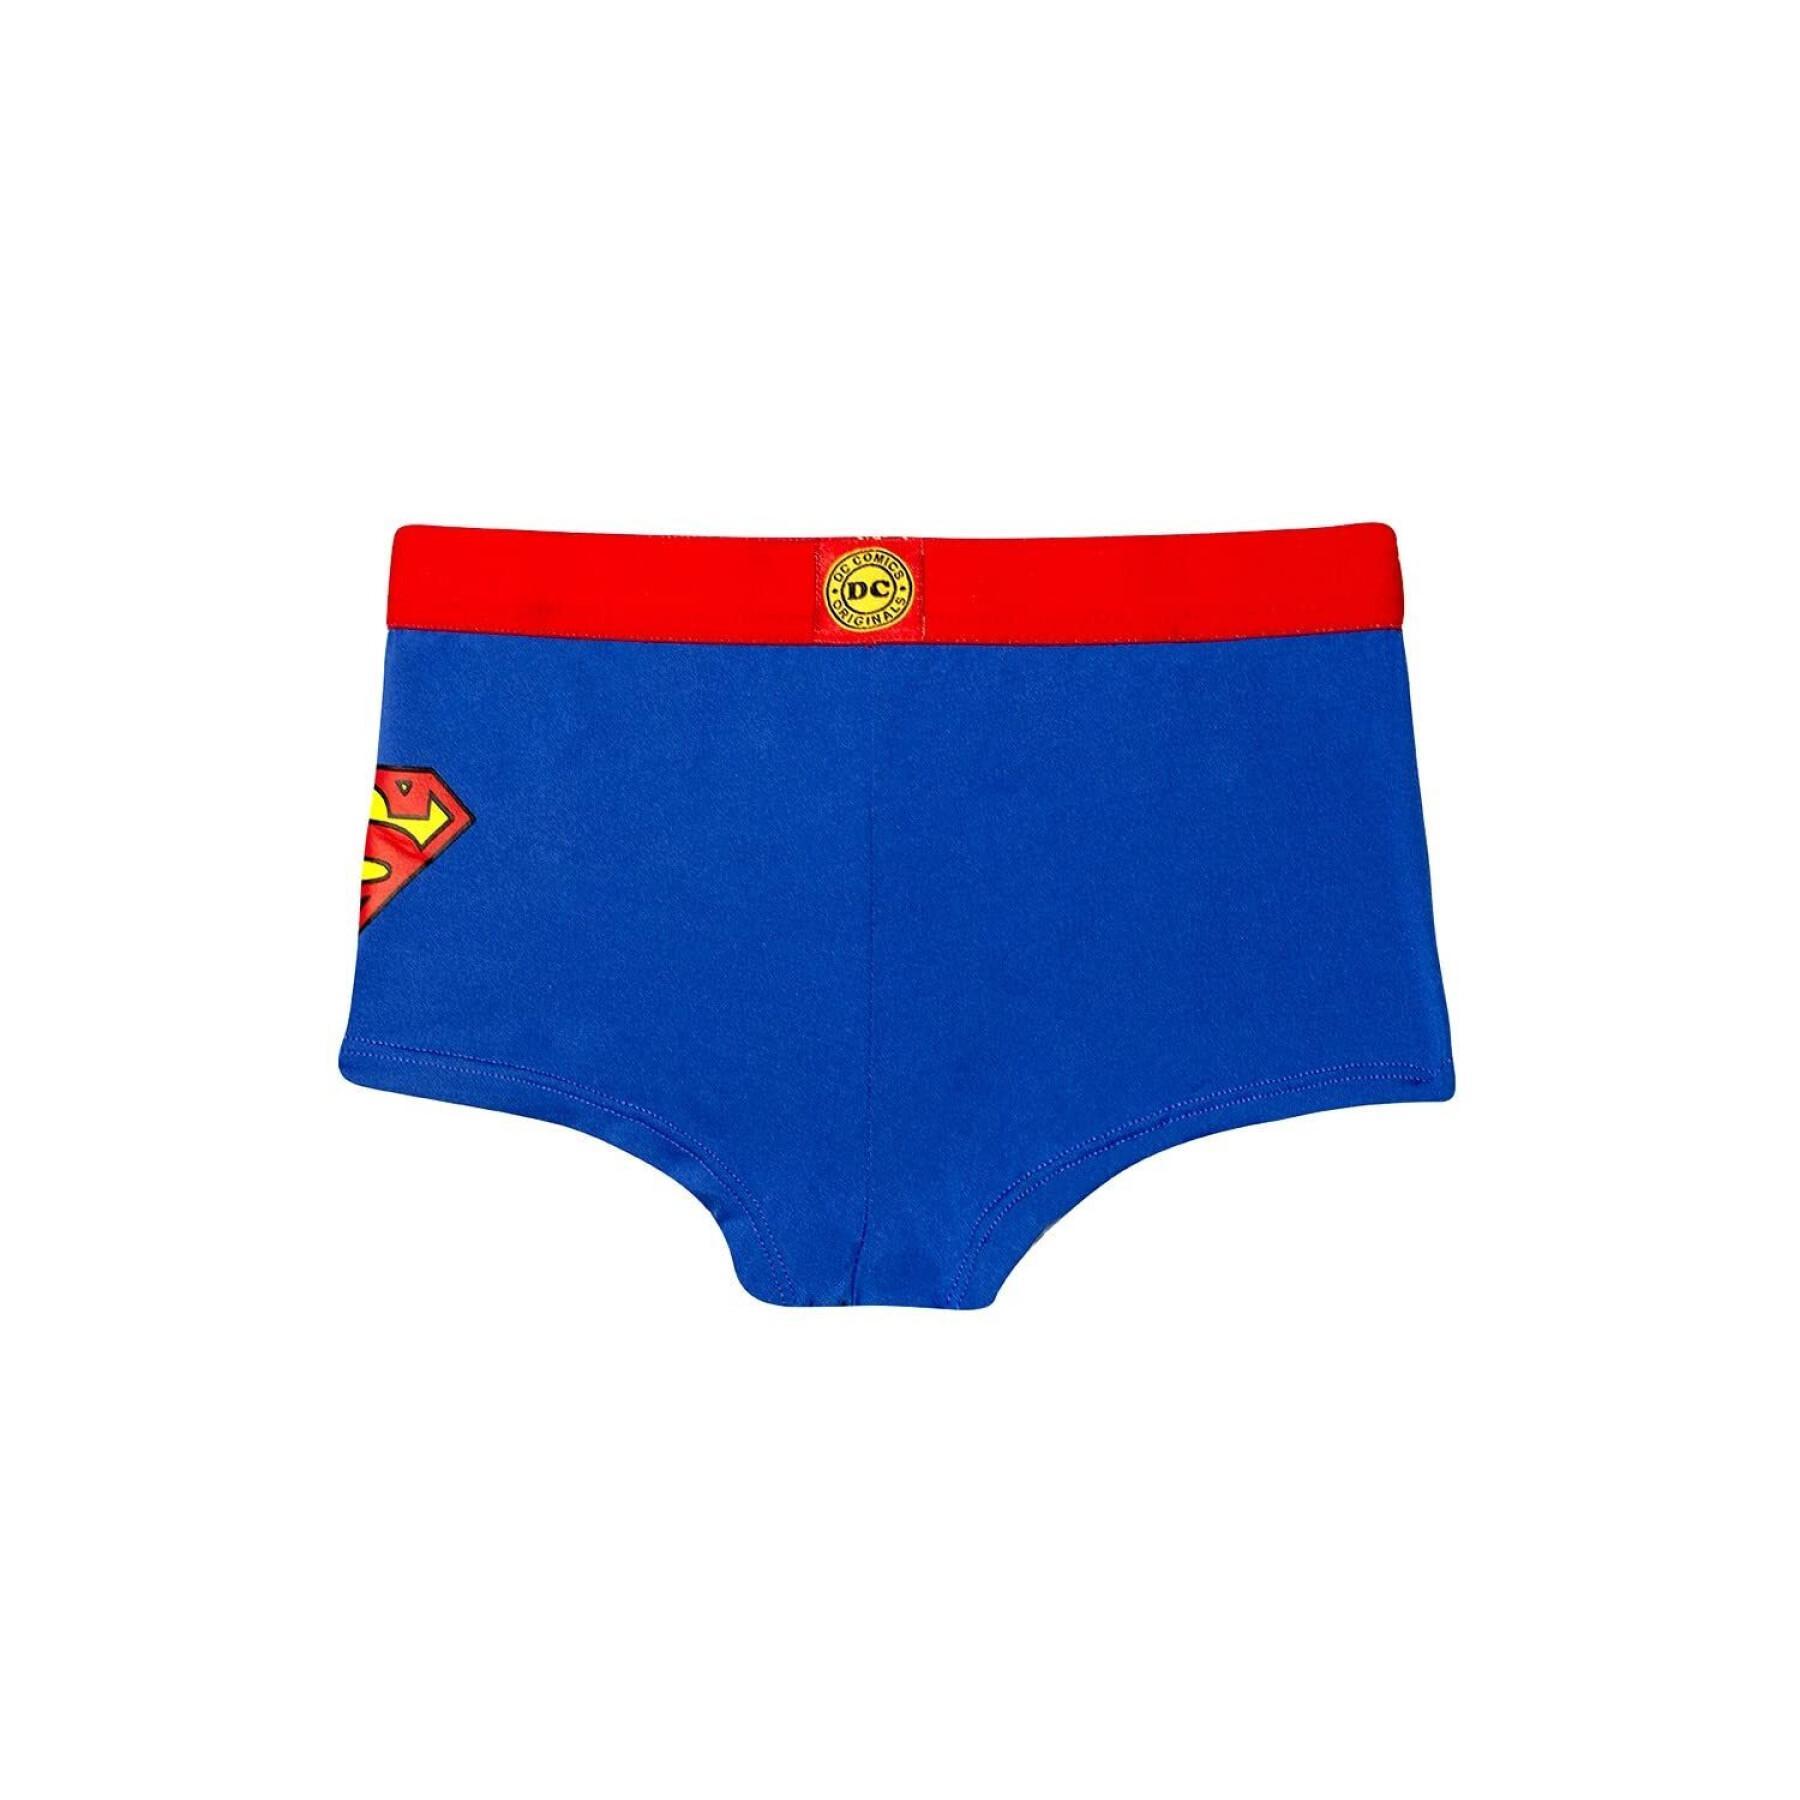 Pantalones cortos de algodón para niña Freegun DC Comics Superman